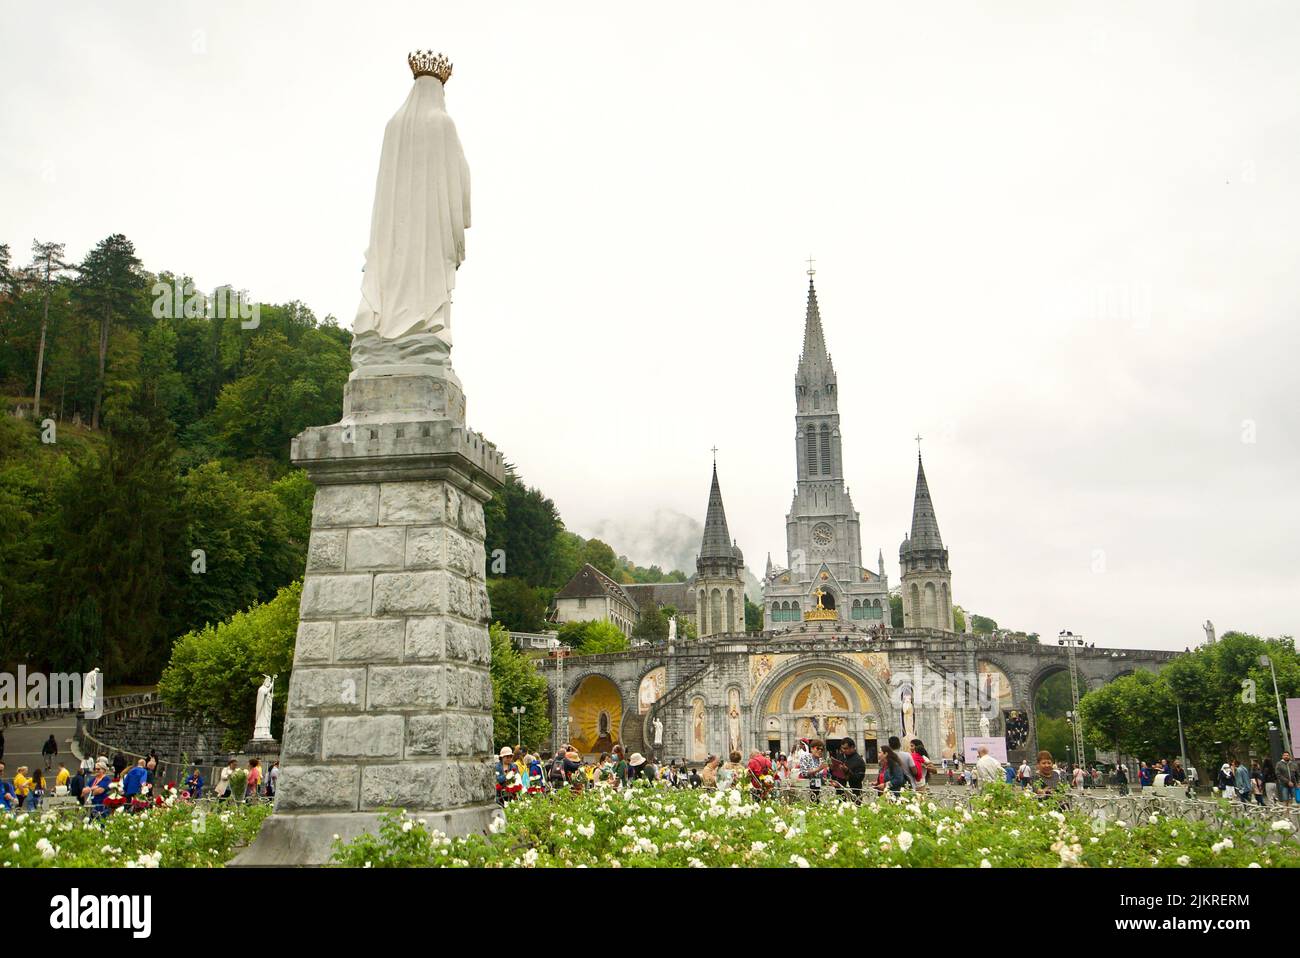 Sanctuaires Notre-Dame de Lourdes, a Catholic pilgrimage site in the South of France. The Sanctuary of Our Lady of Lourdes. Church. Cathedral. Shrine. Stock Photo